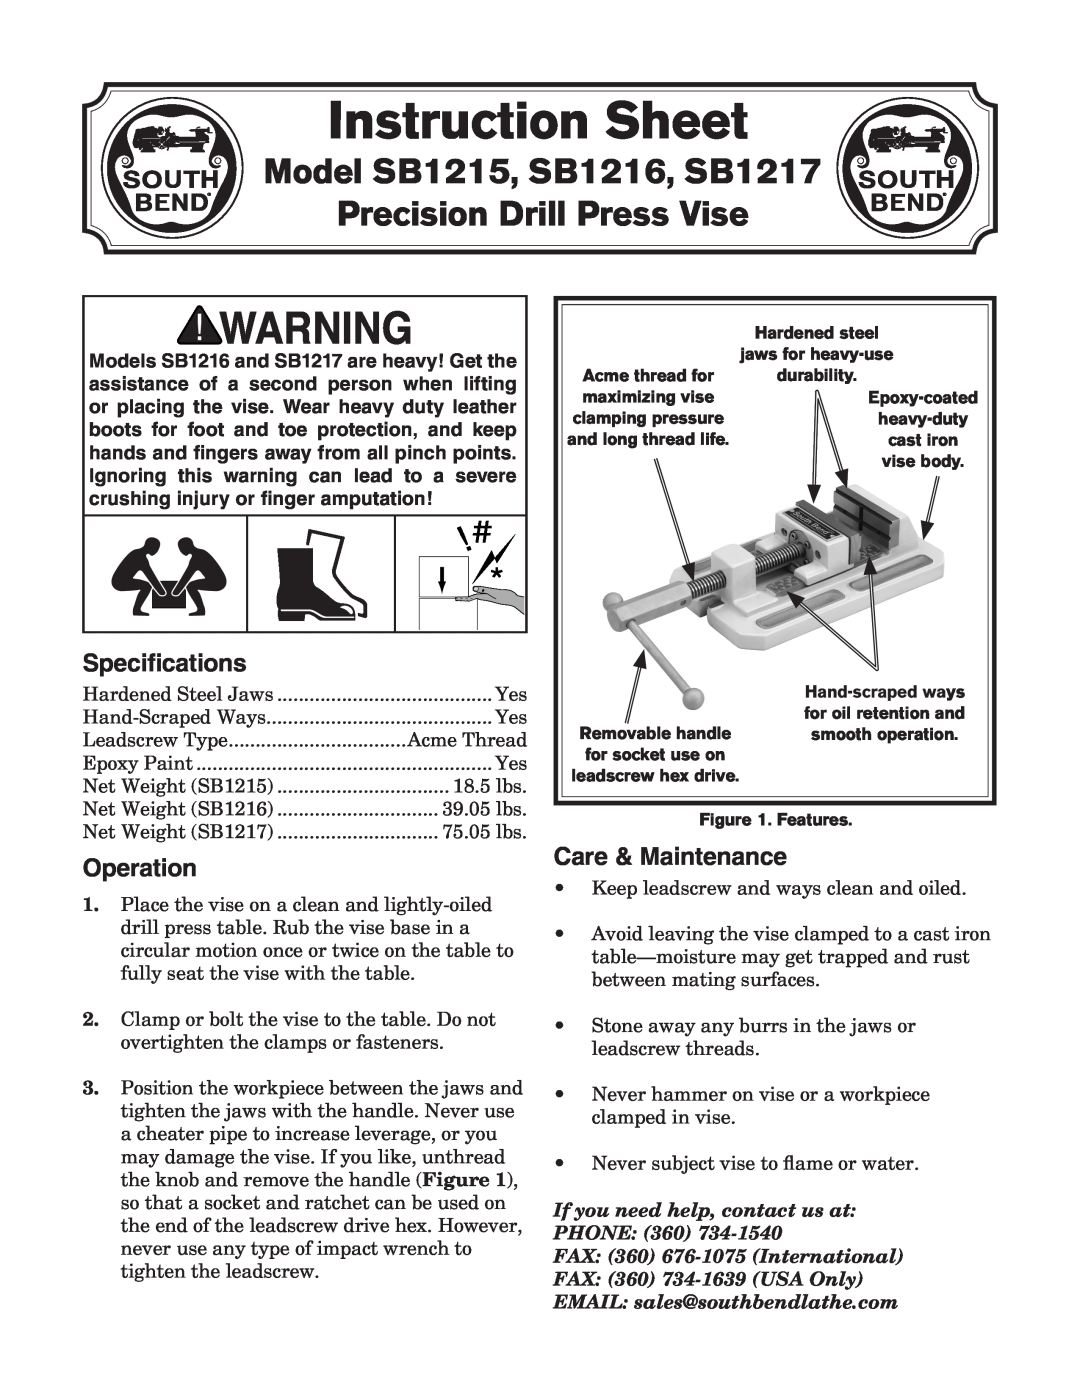 Woodstock instruction sheet Instruction Sheet, Model SB1215, SB1216, SB1217 Precision Drill Press Vise, Specifications 